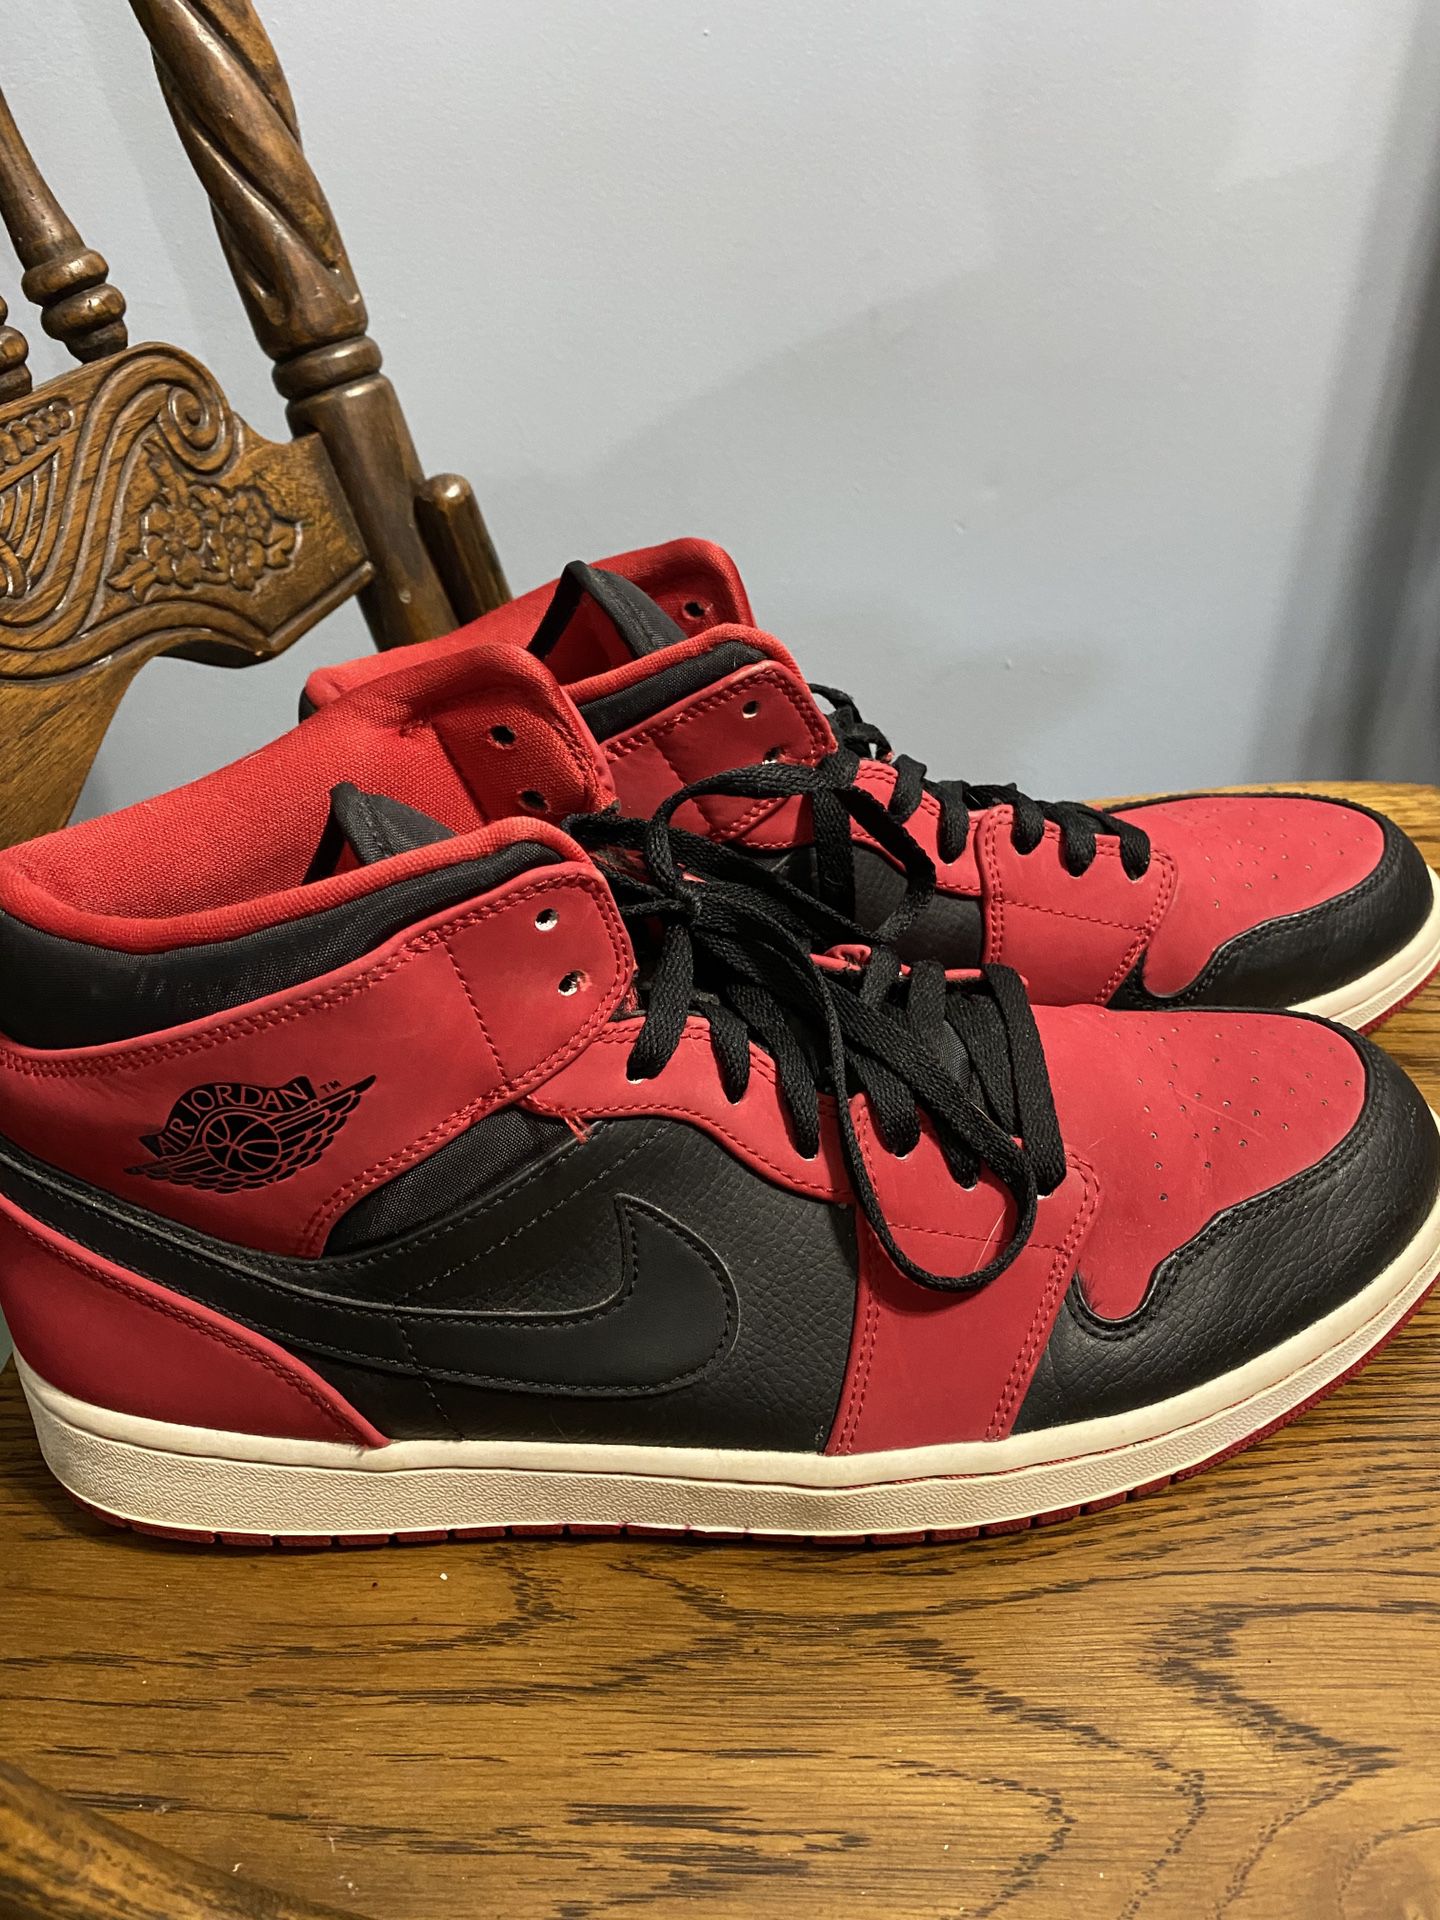 Nike Air Jordan’s